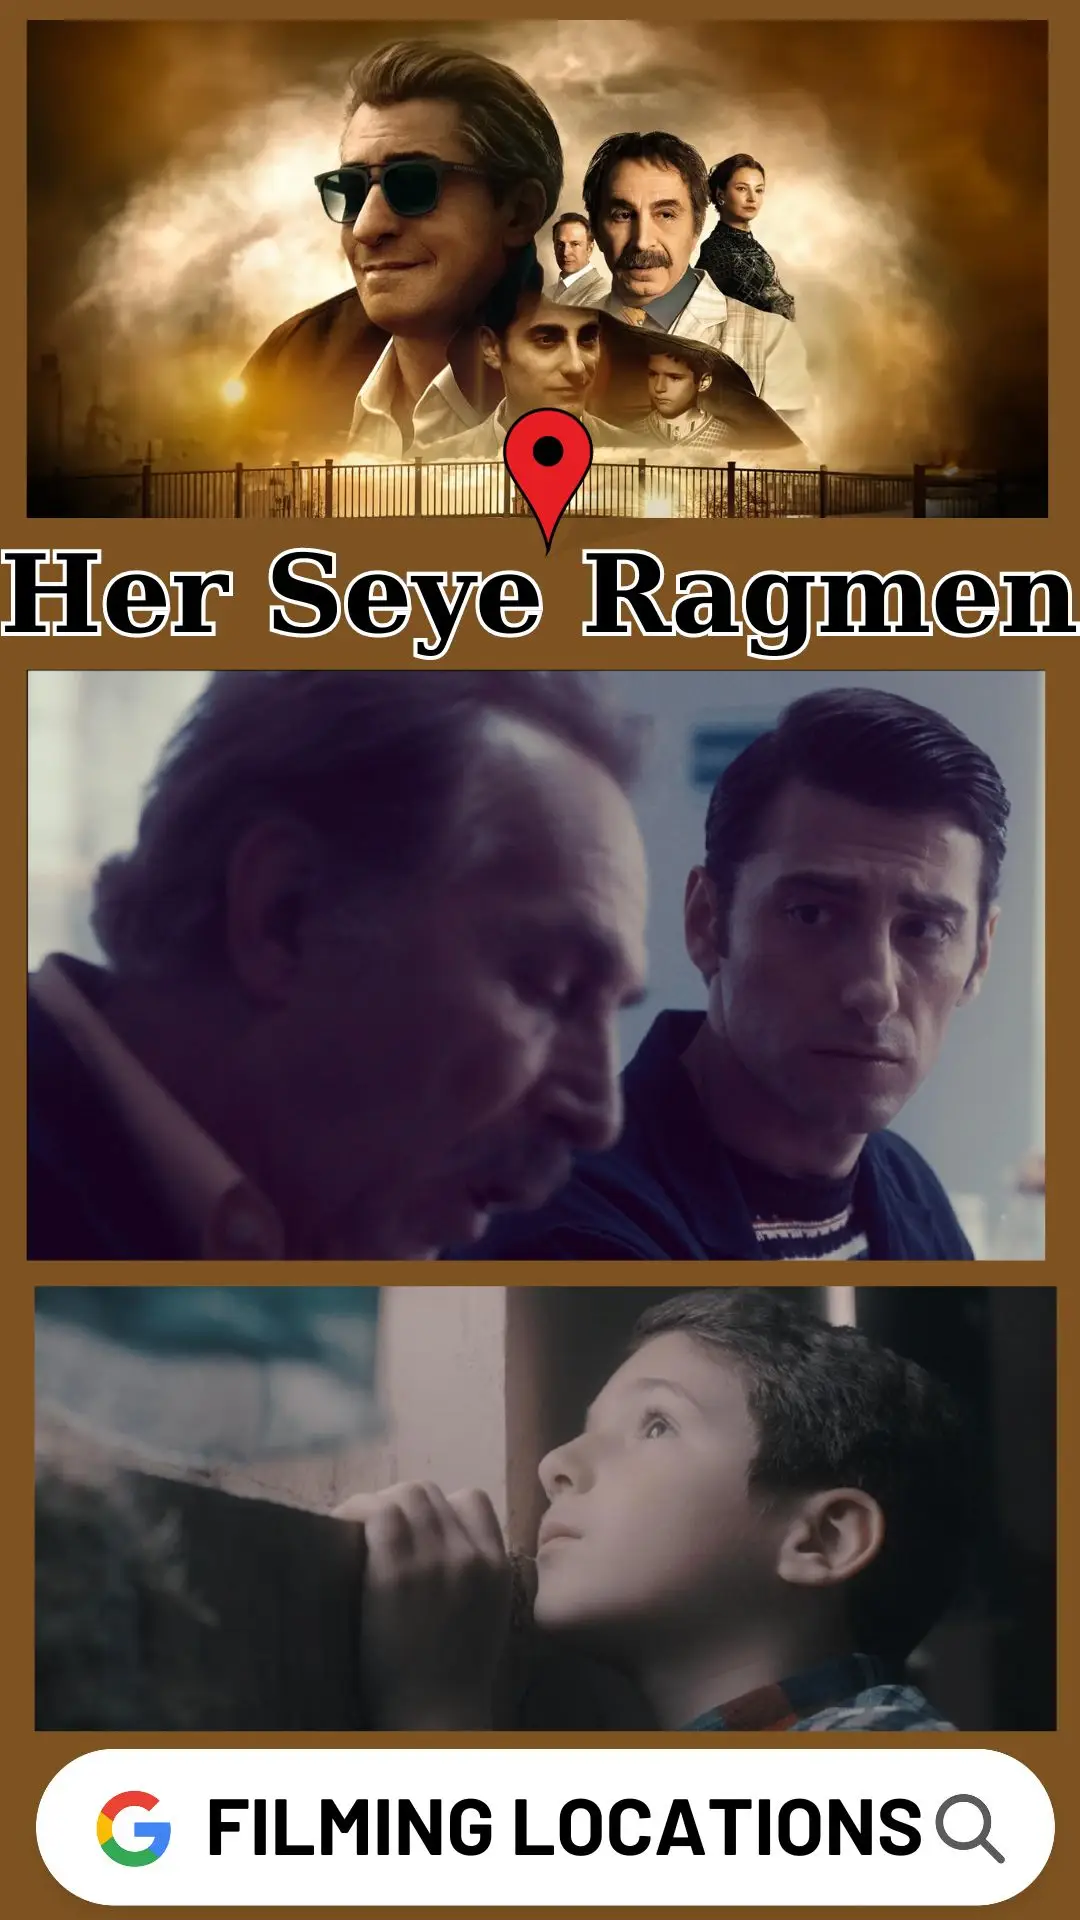 Her Seye Ragmen Filming Locations